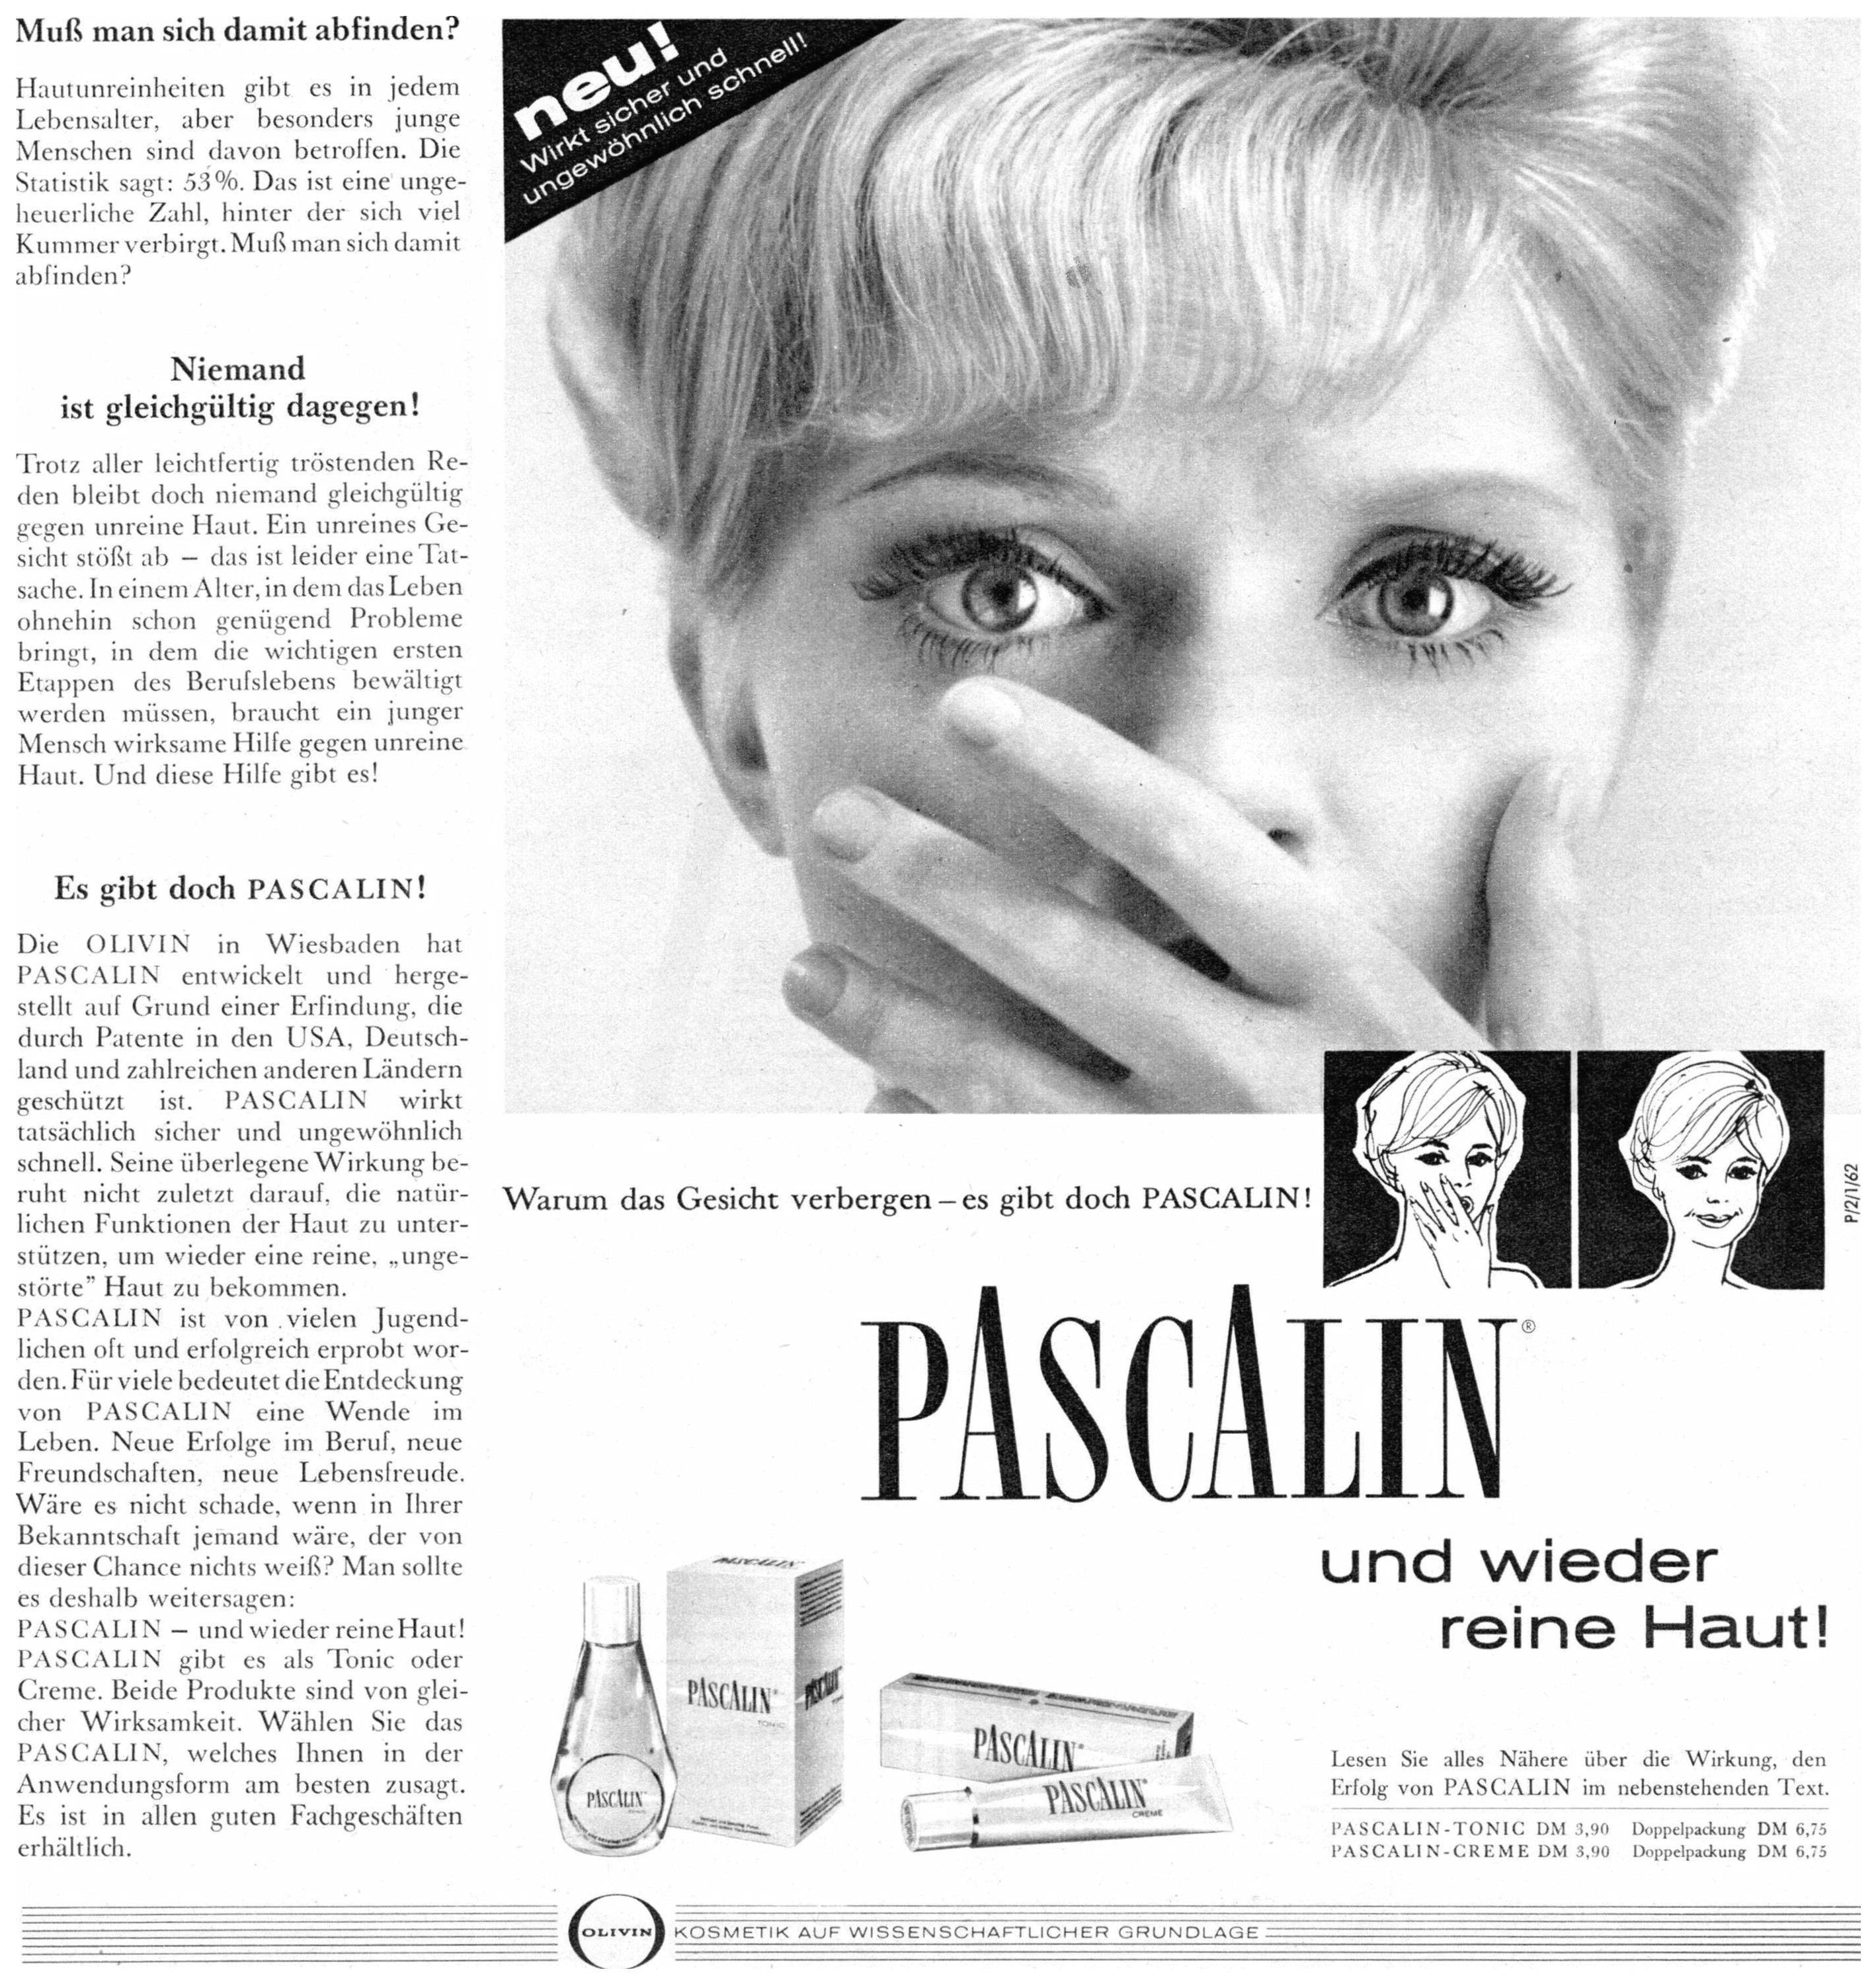 Pascalin 1962 0.jpg